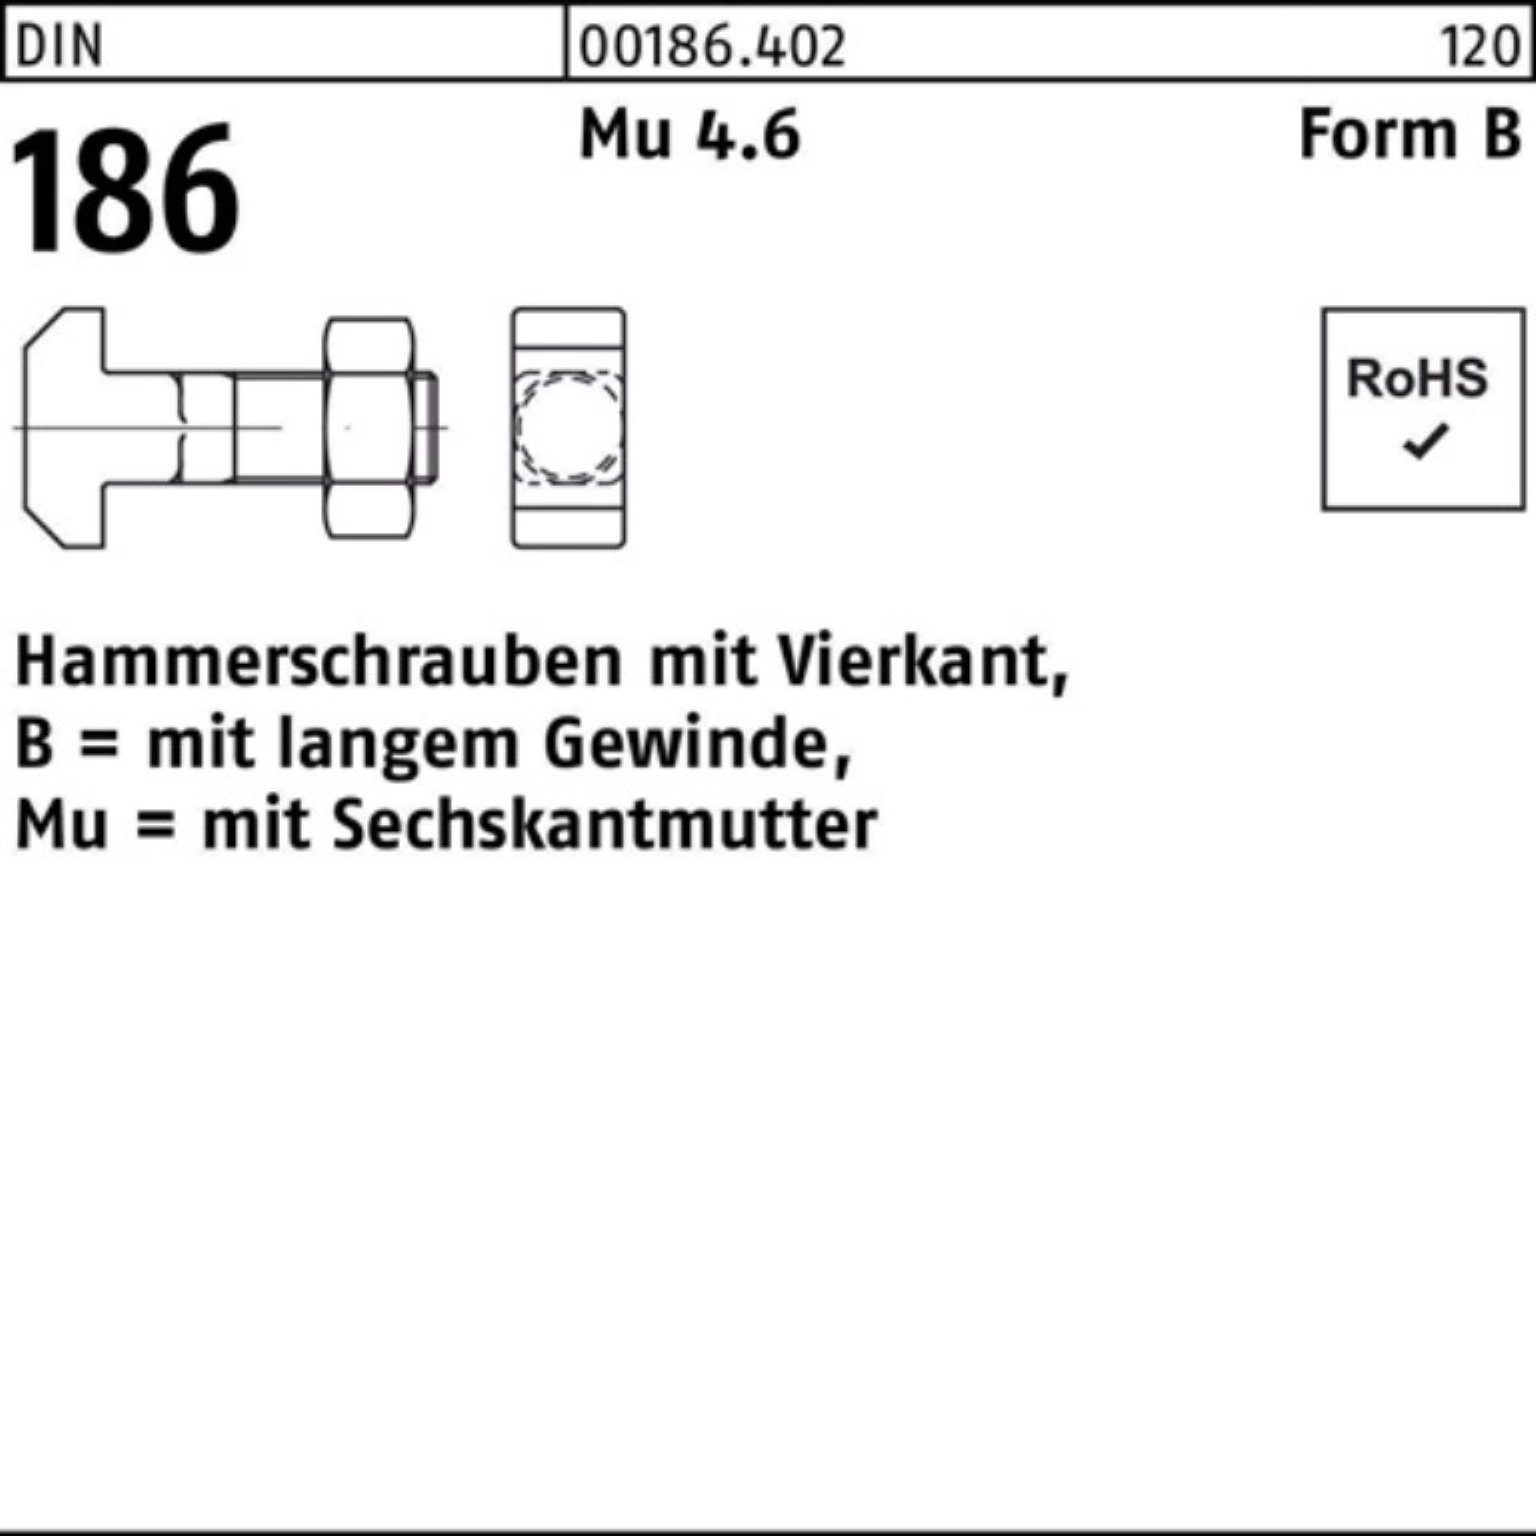 Reyher Schraube 100er Pack Hammerschraube DIN 186 FormB Vierkant 6-ktmutter BM 24x 200 | Schrauben